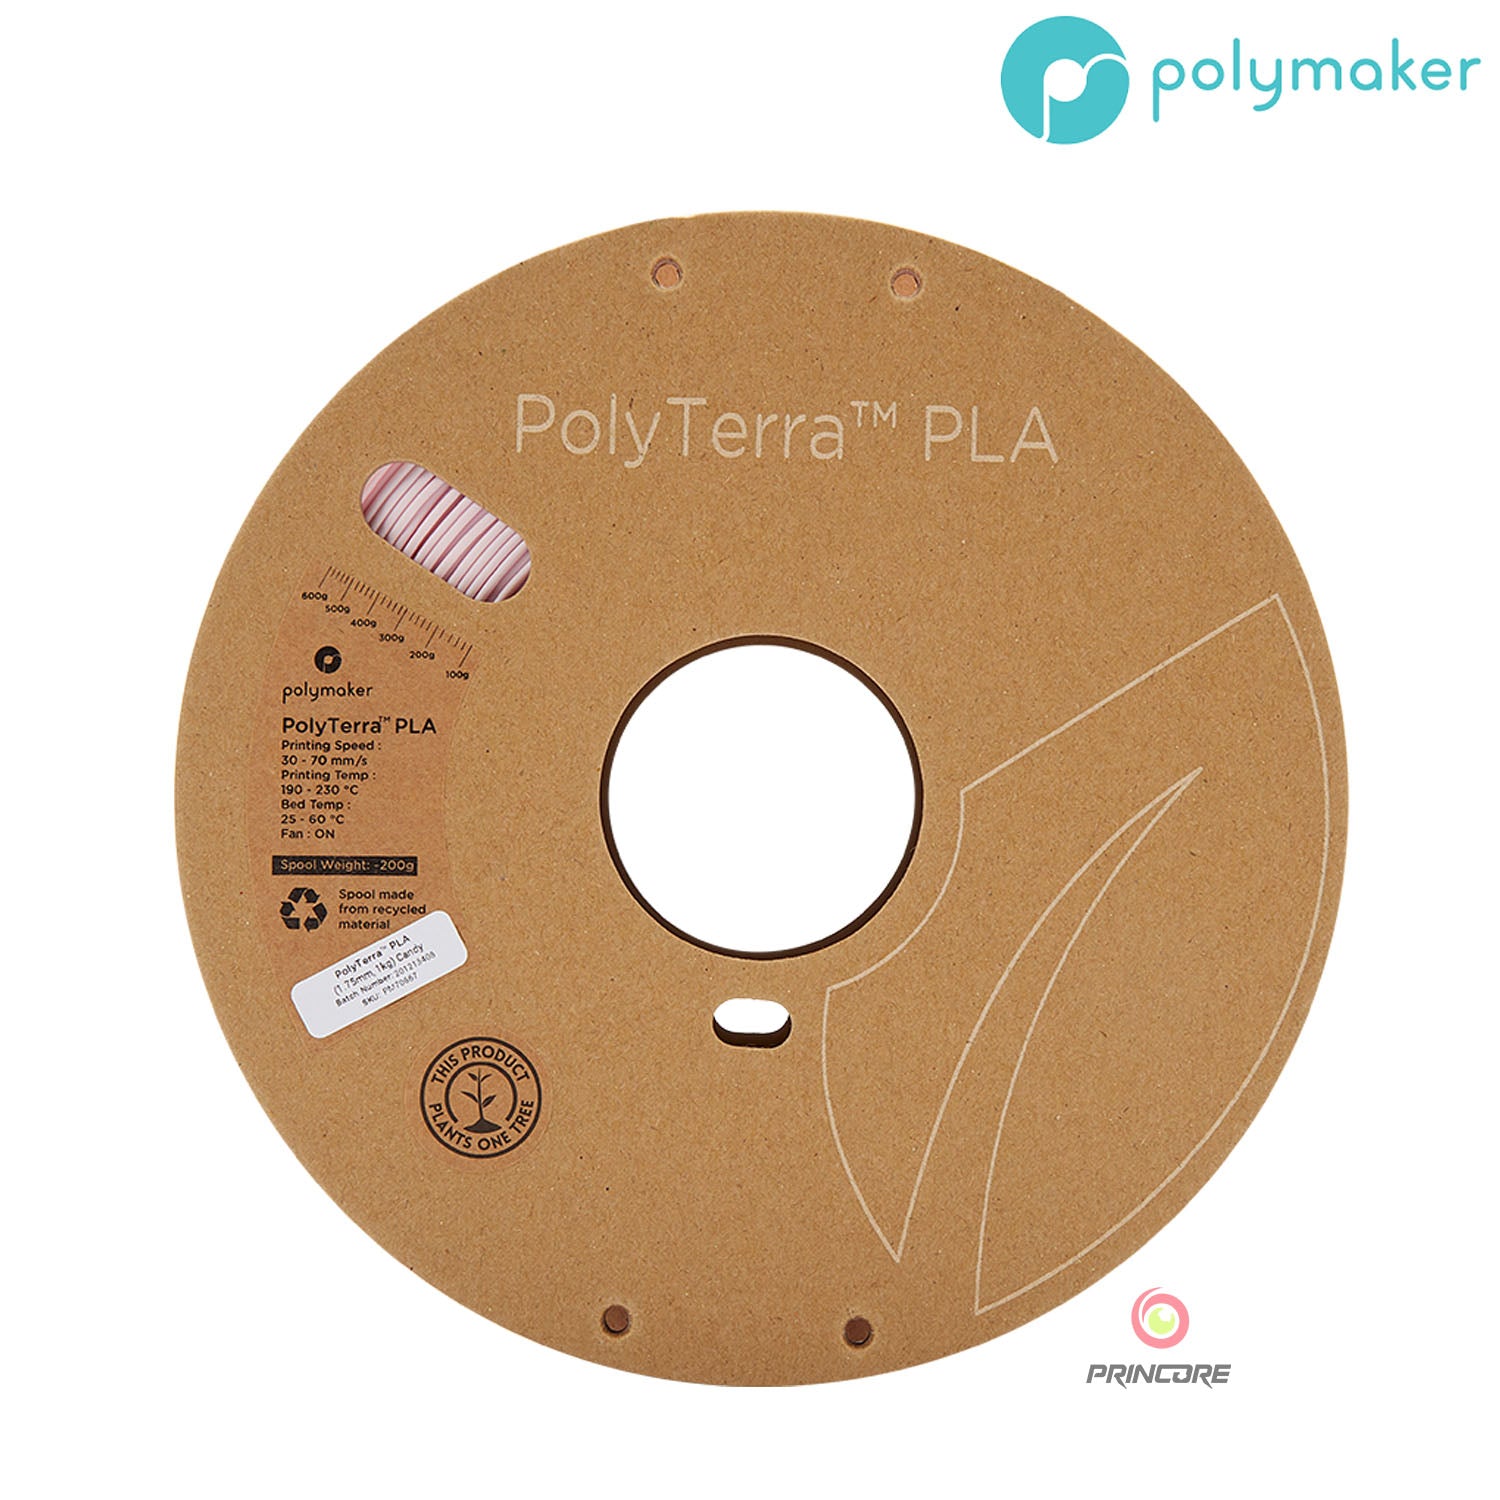 Polymaker PolyTerra™ PLA - Candy [1.75mm] (19,90€/Kg)